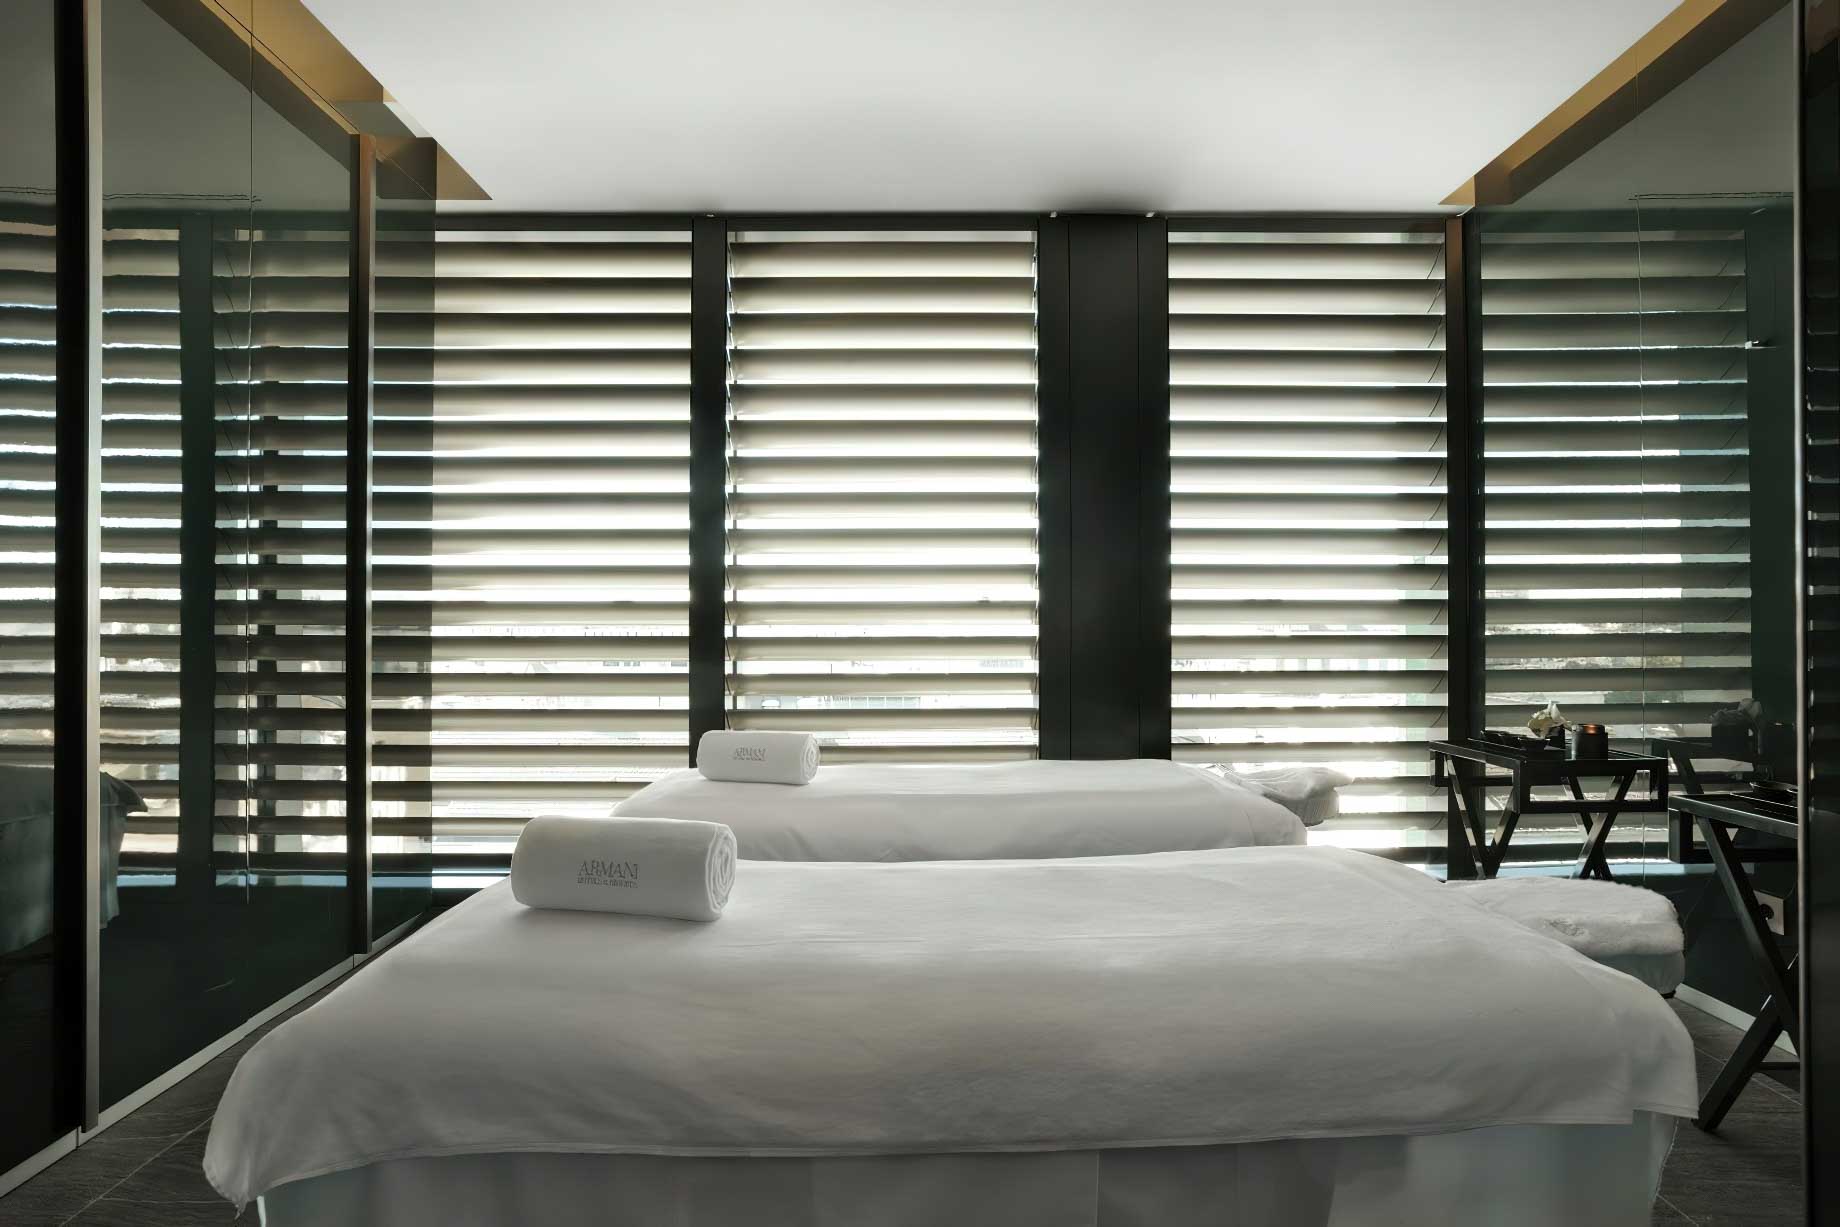 141 – Armani Hotel Milano – Milan, Italy – Armani SPA Treatment Tables